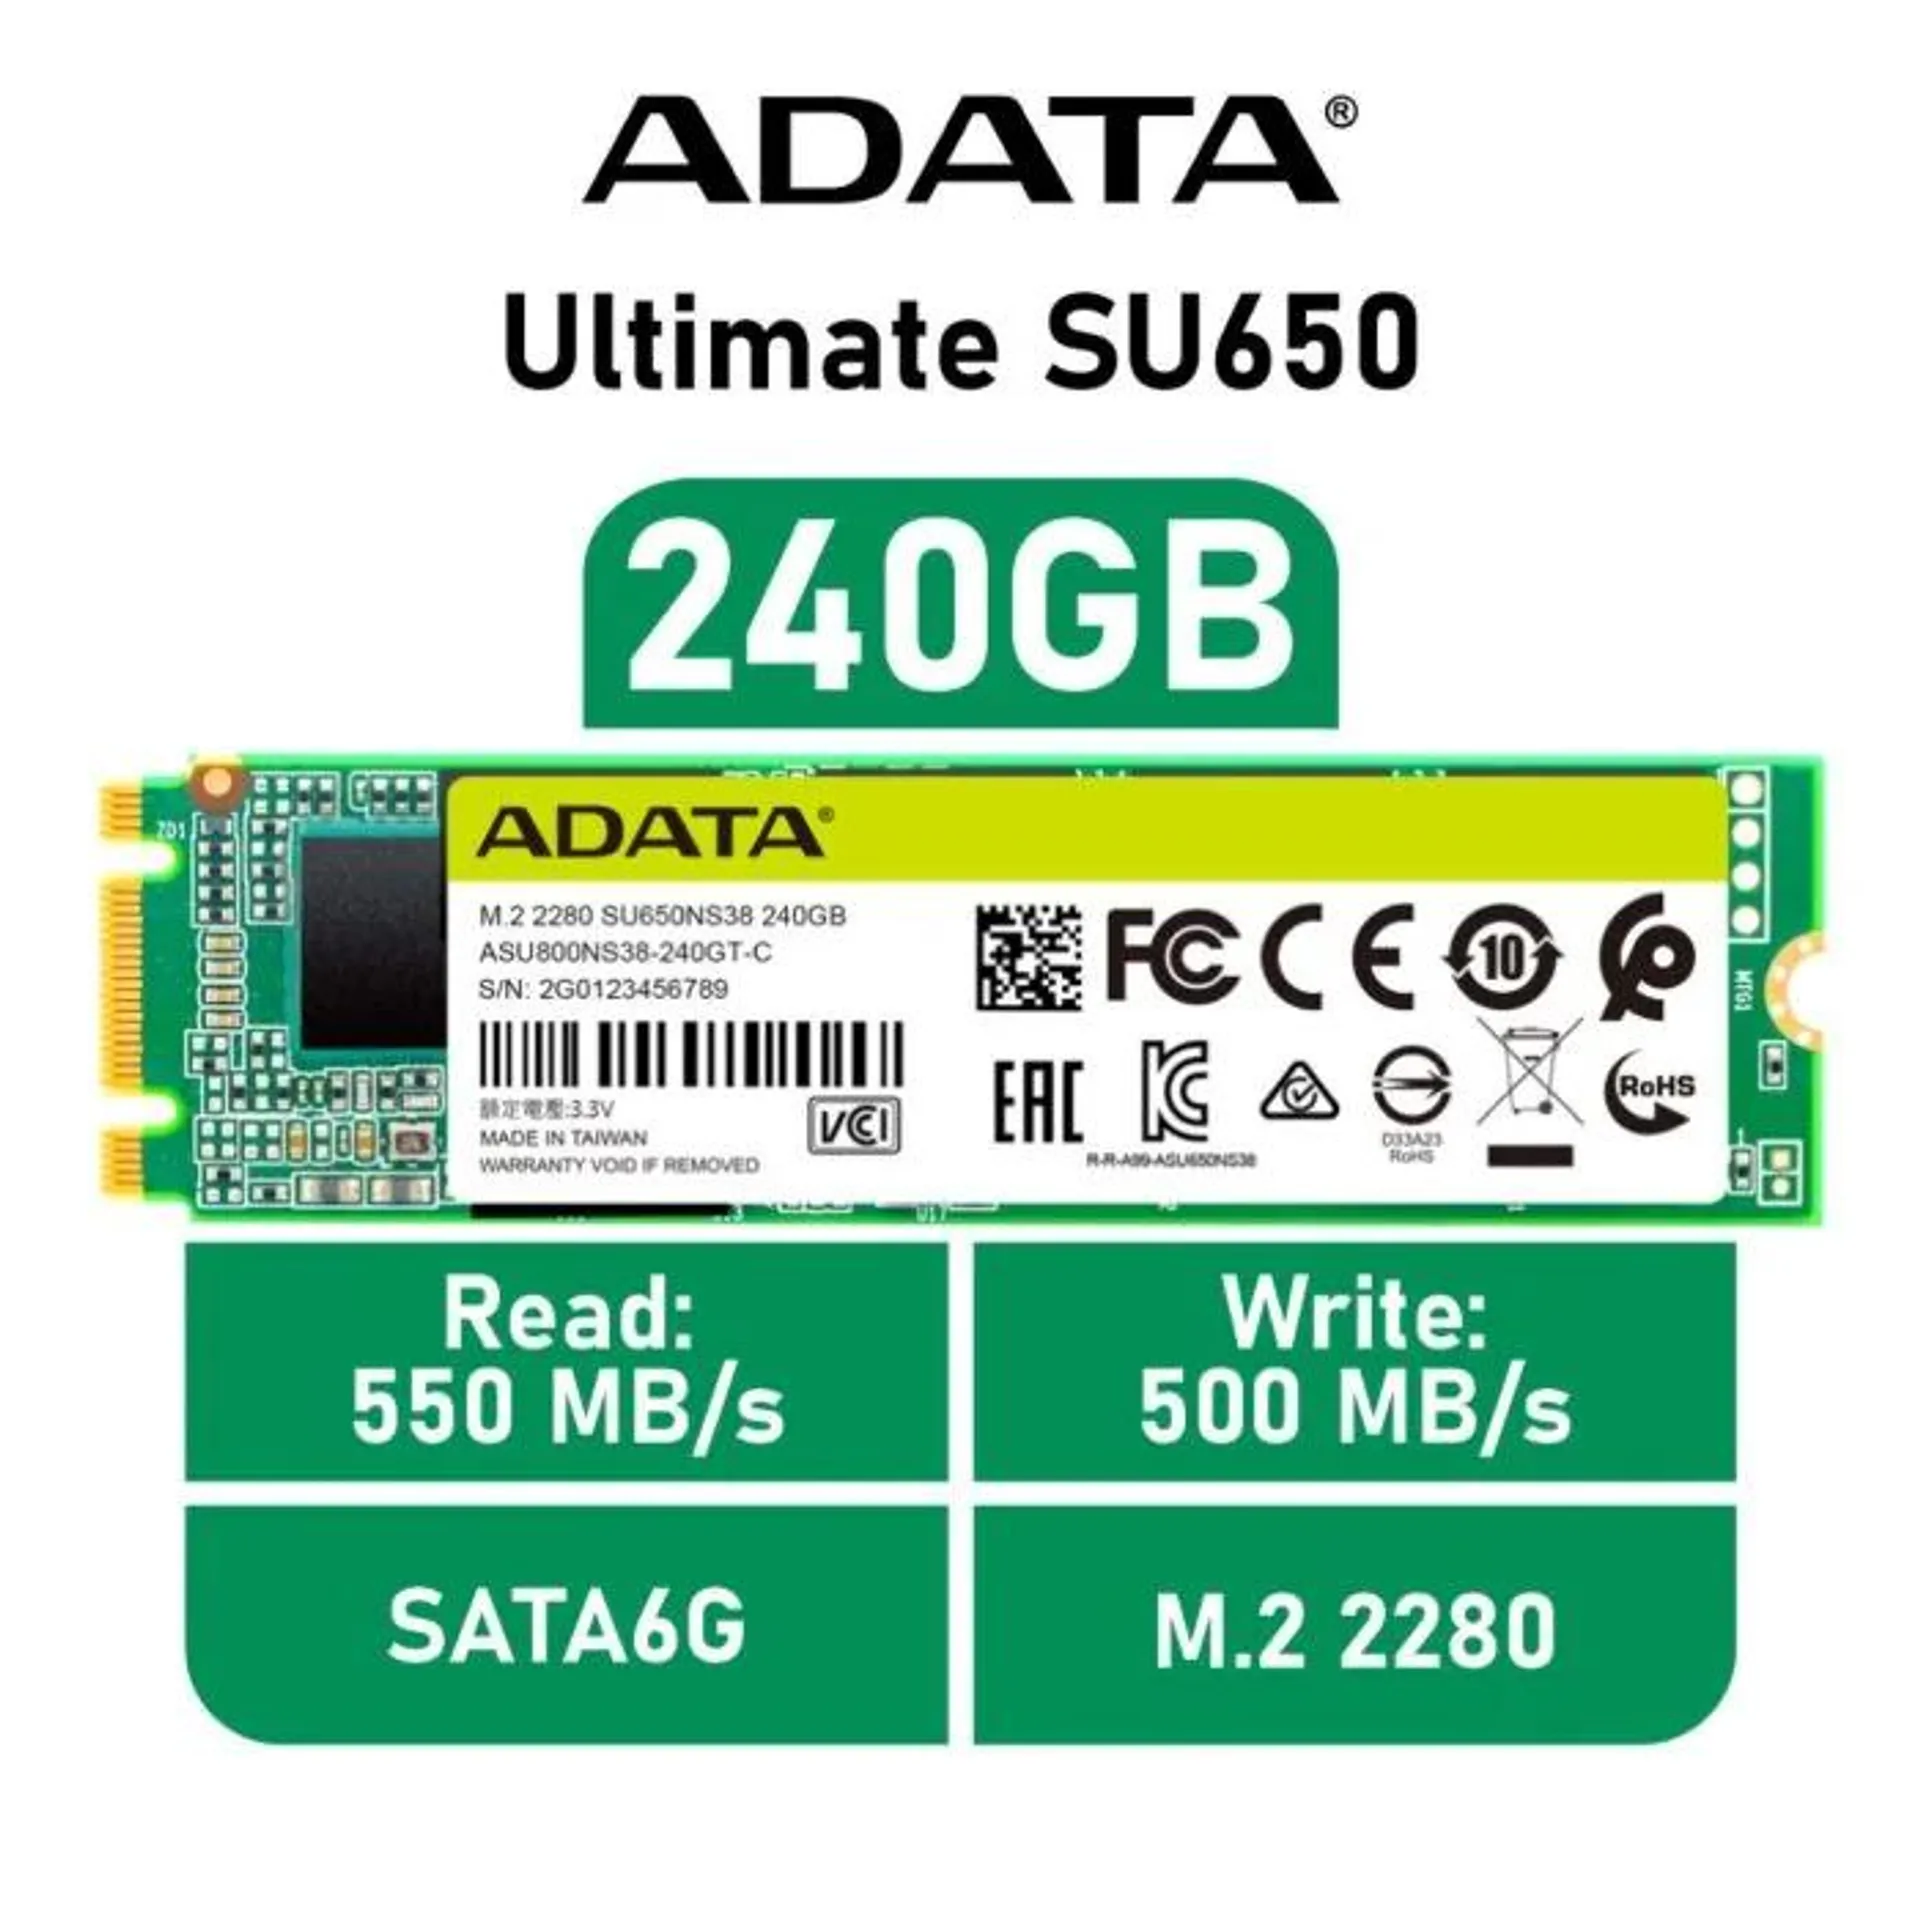 ADATA Ultimate SU650 240GB SATA6G ASU650NS38-240GT-C M.2 2280 Solid State Drive